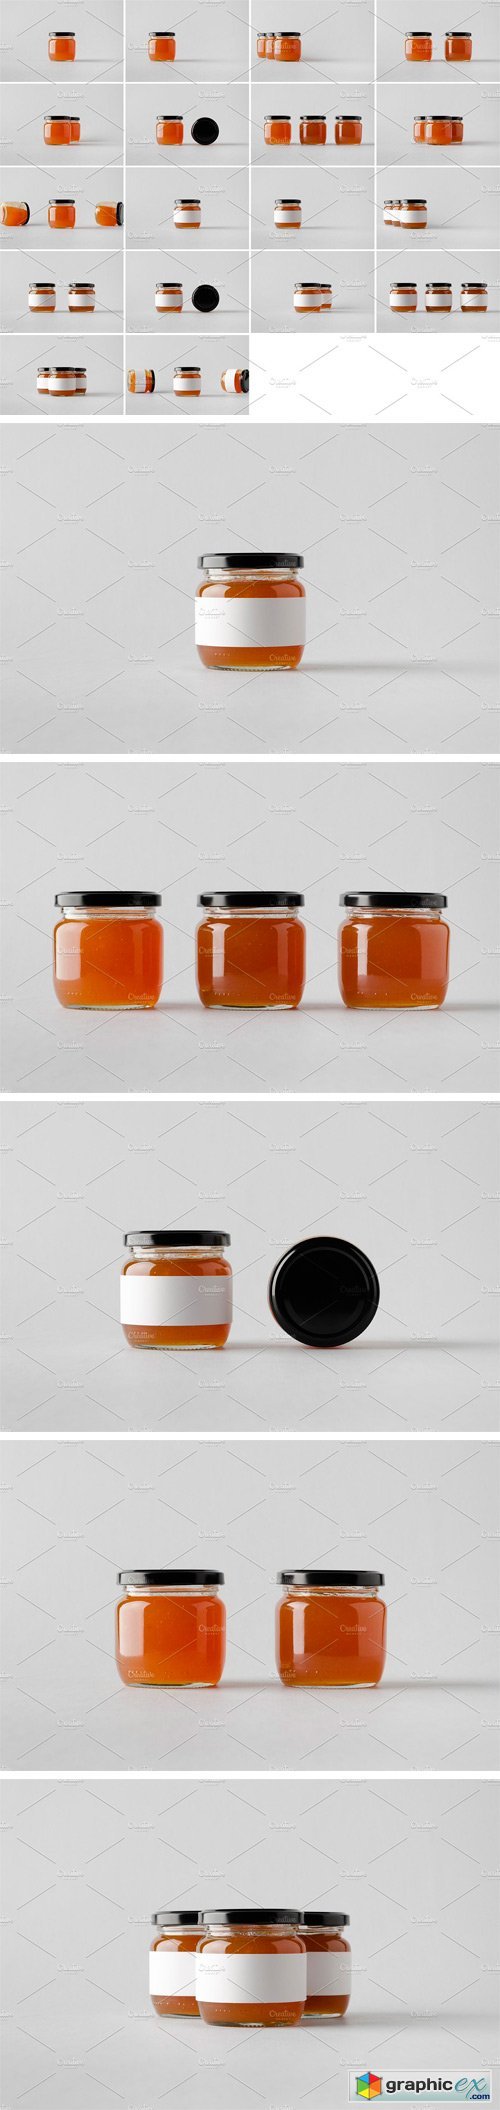 Apricot Jam Jar Mock-Up Photo Bundle